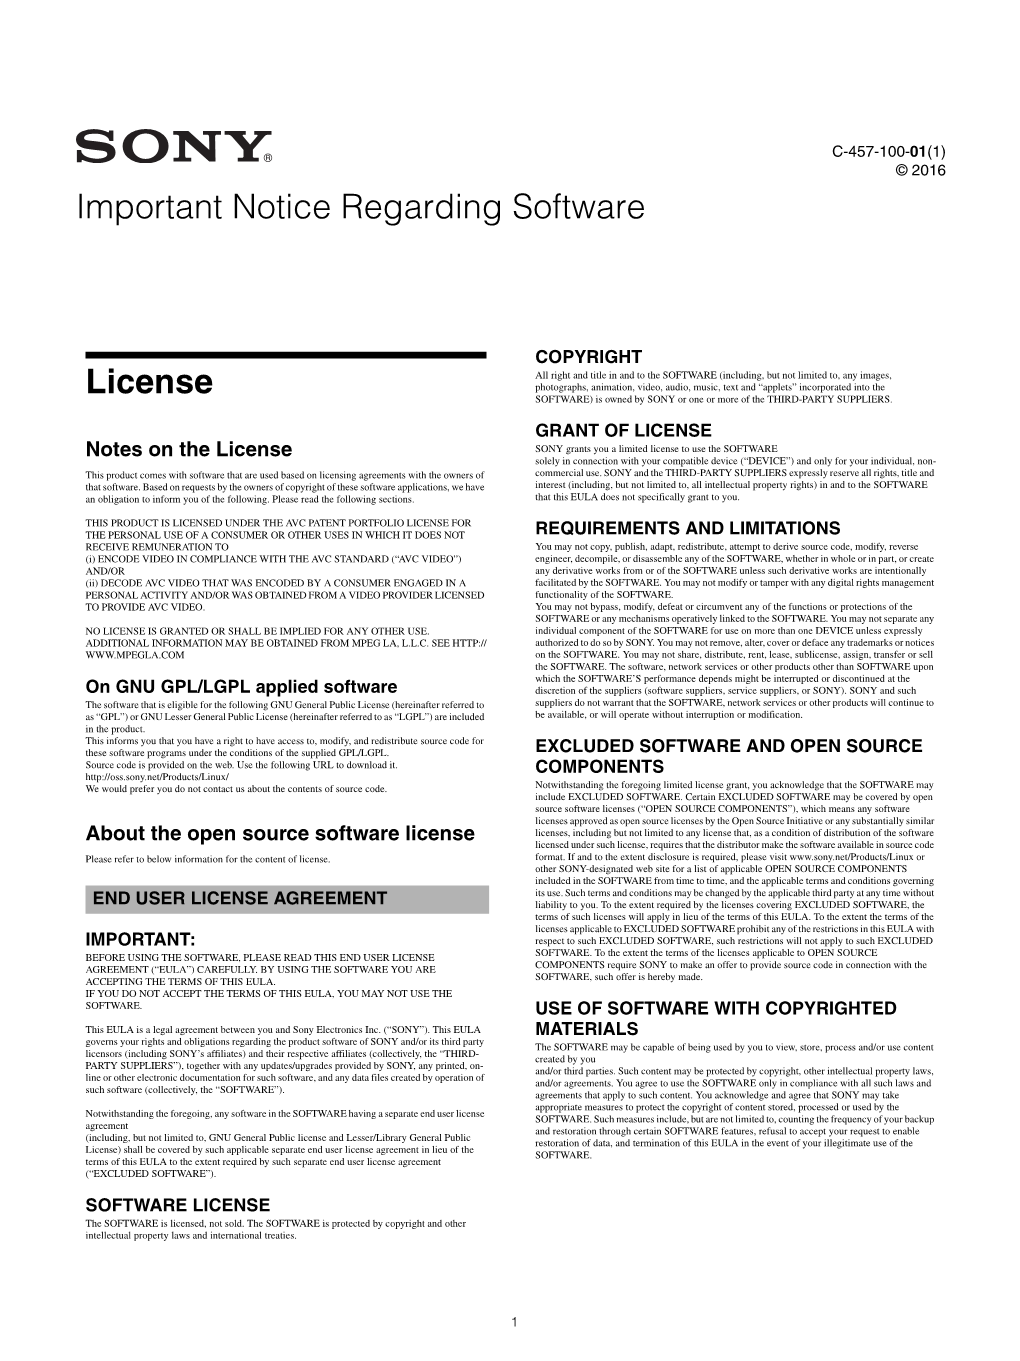 Important Notice Regarding Software License